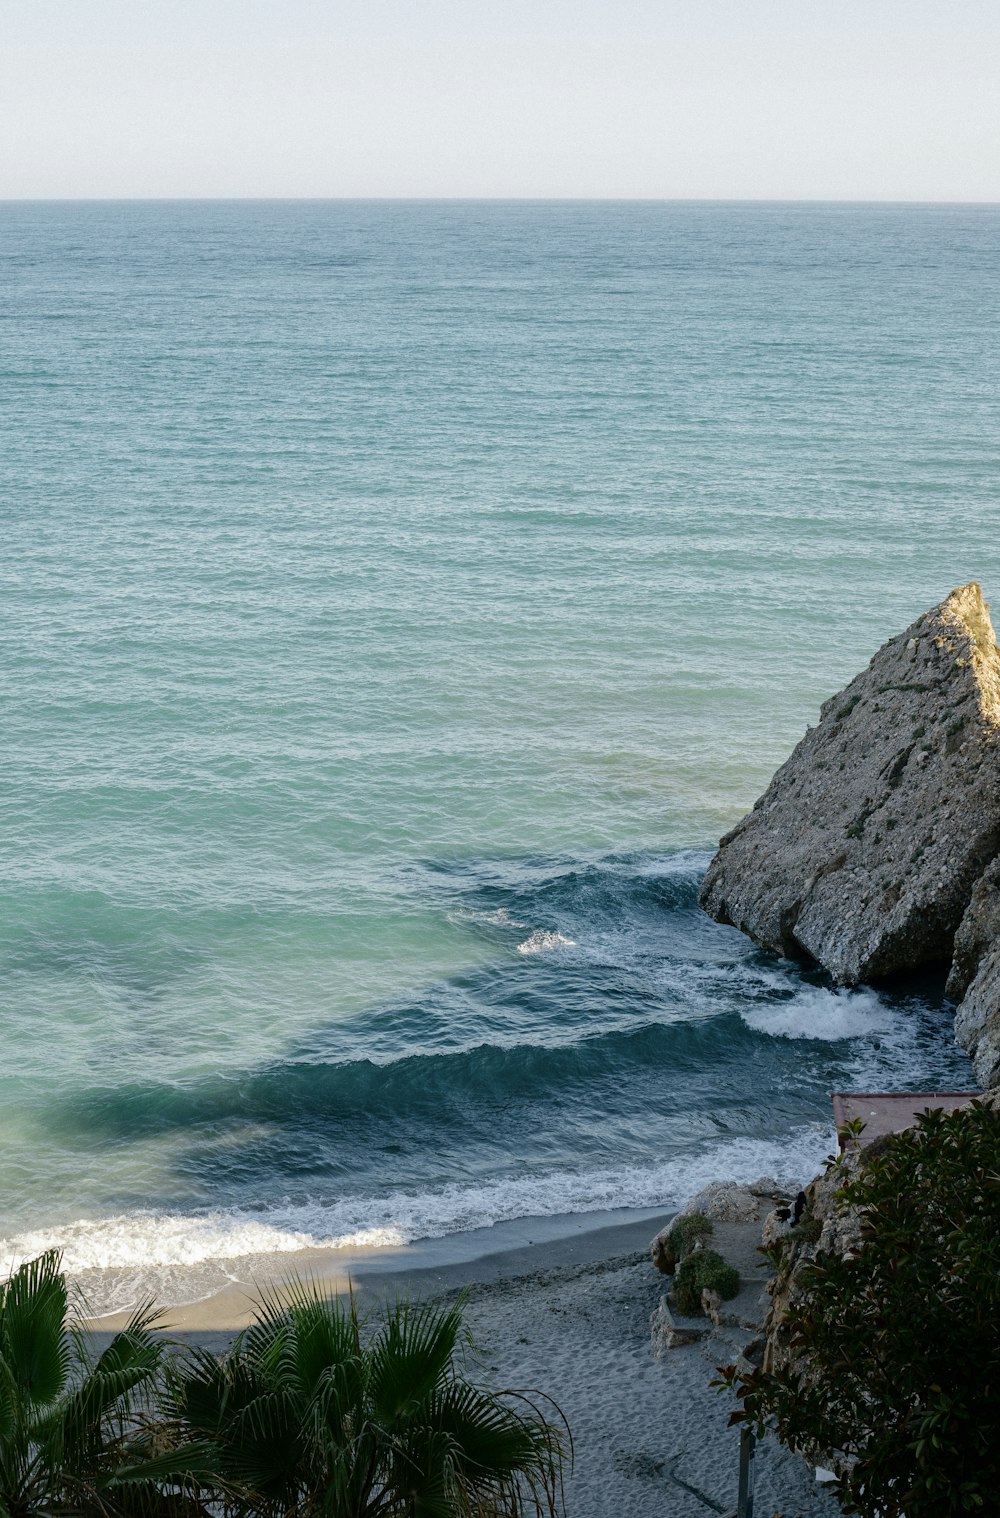 a rocky beach with waves crashing